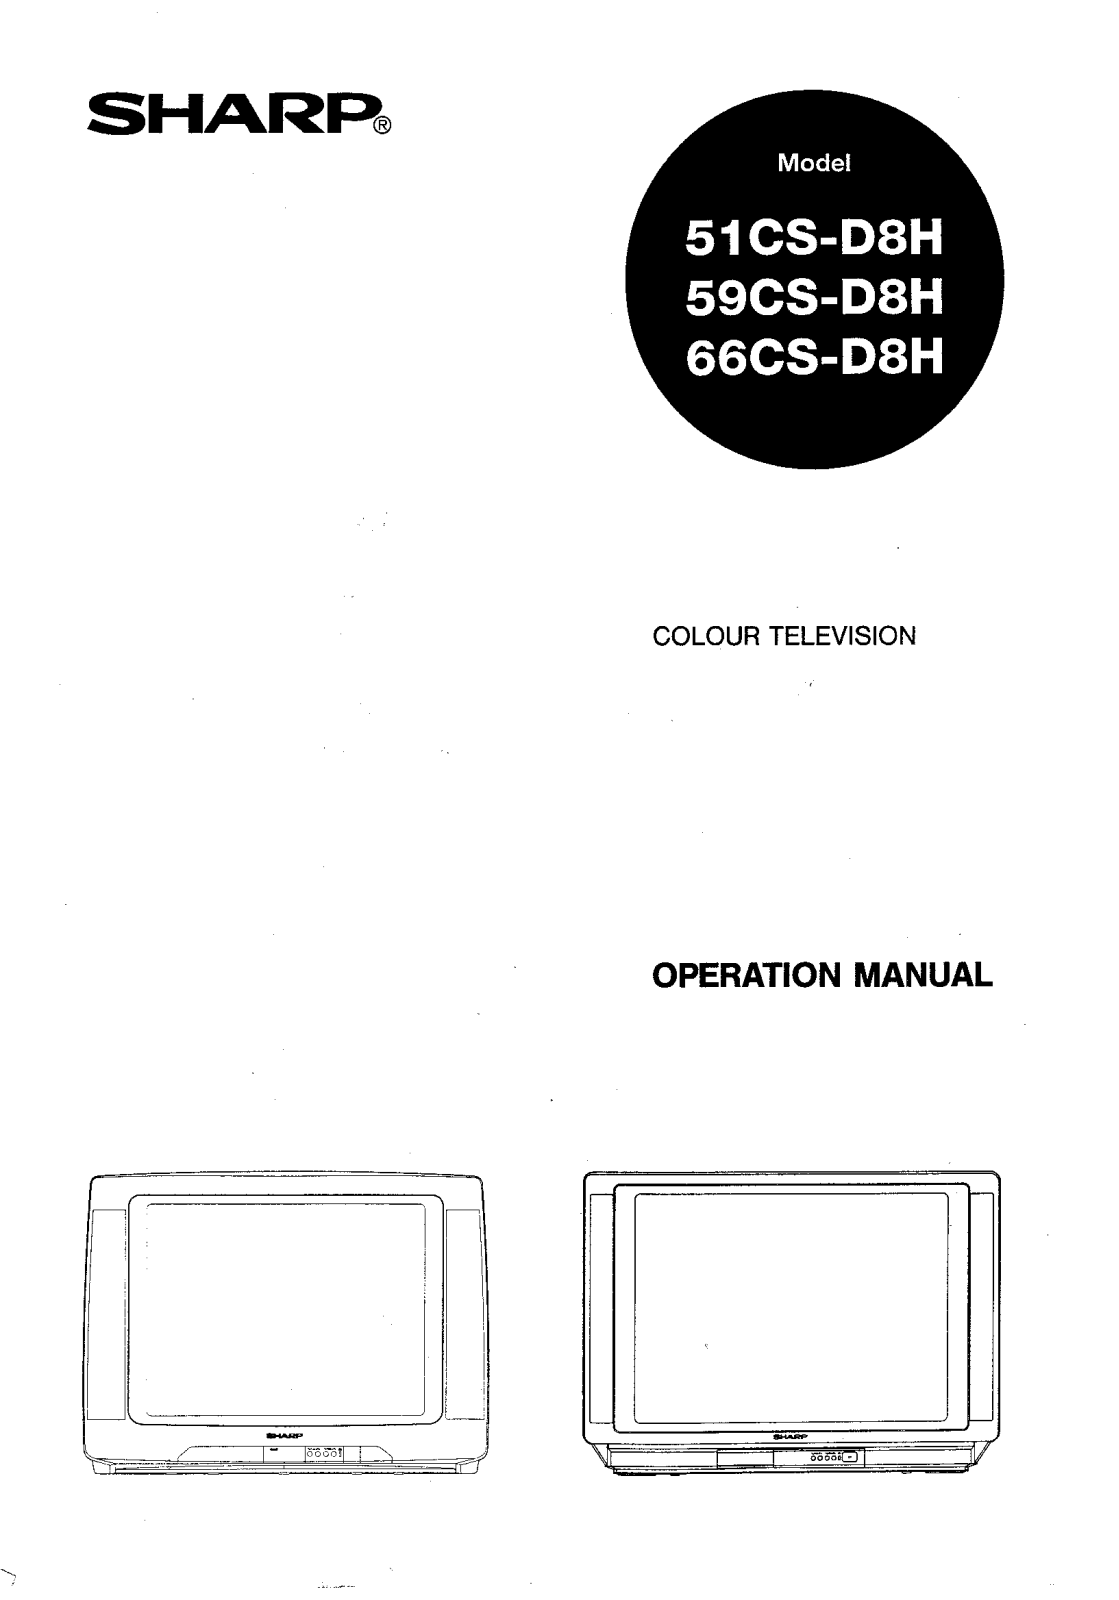 Sharp 59CS-D8H, 66CS-D8H User Manual